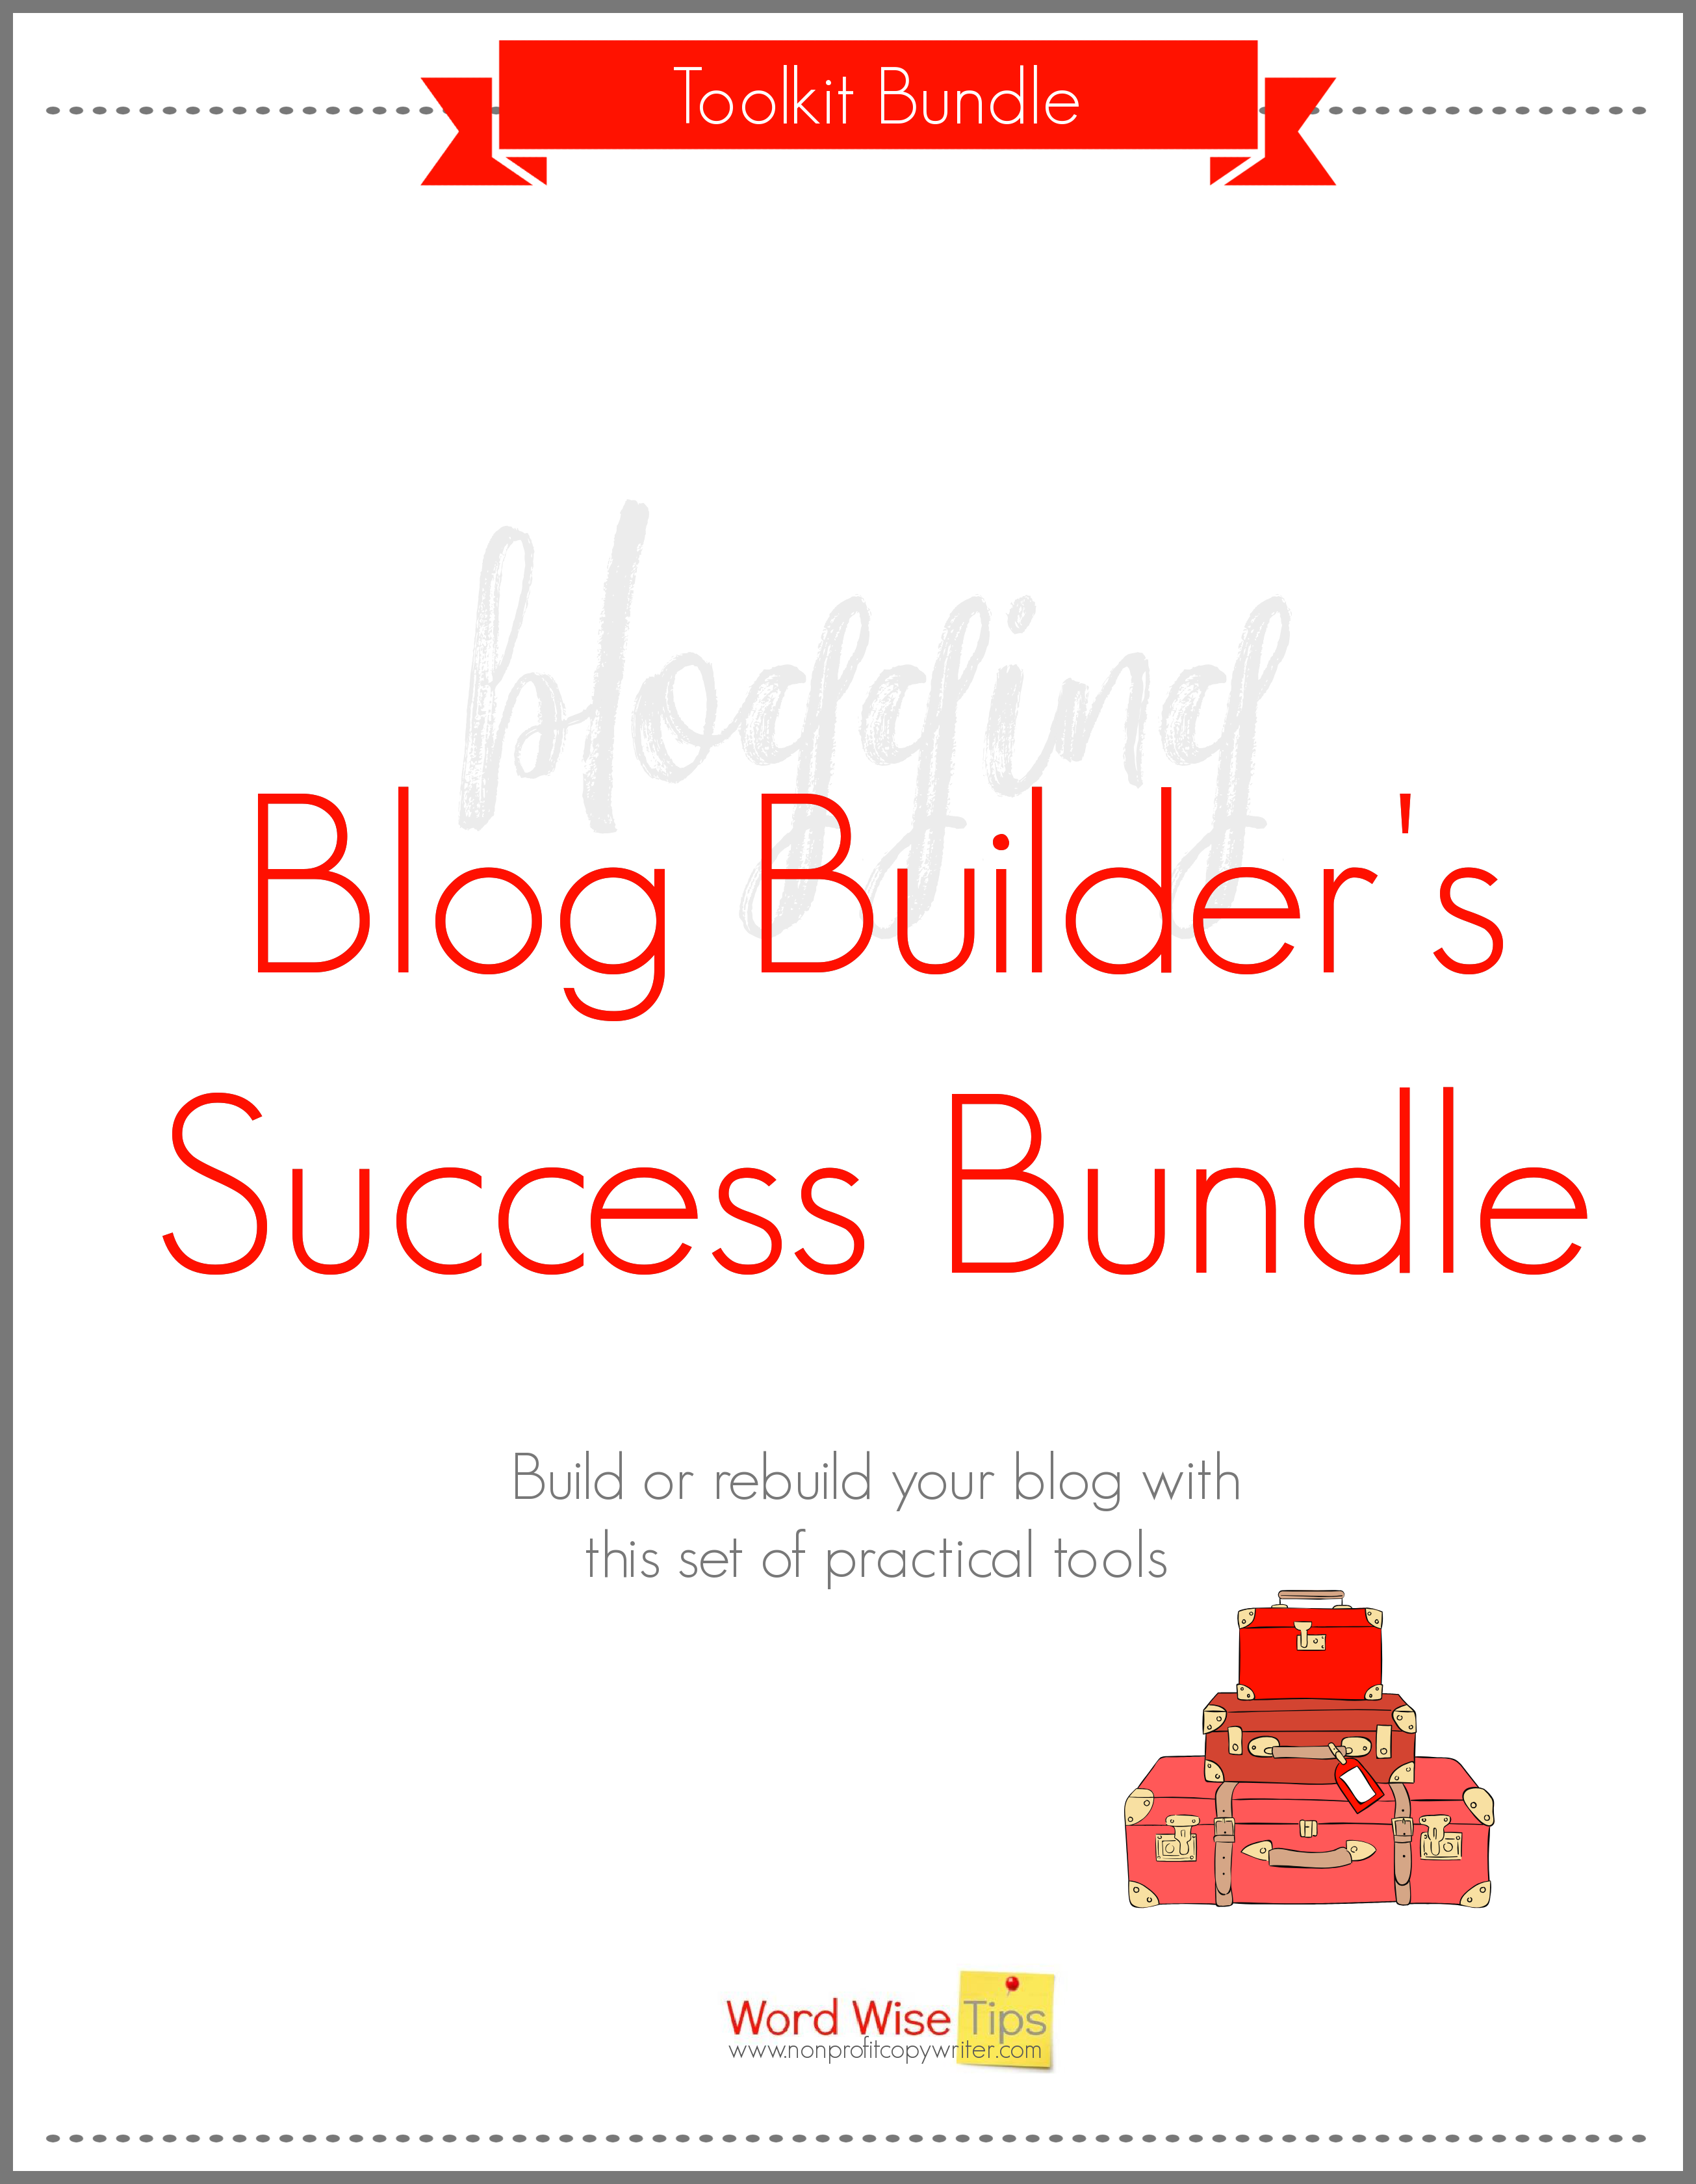 Blog Builder's Success Bundle with Word Wise at Nonprofit Copywriter #Blogging #WritingTips